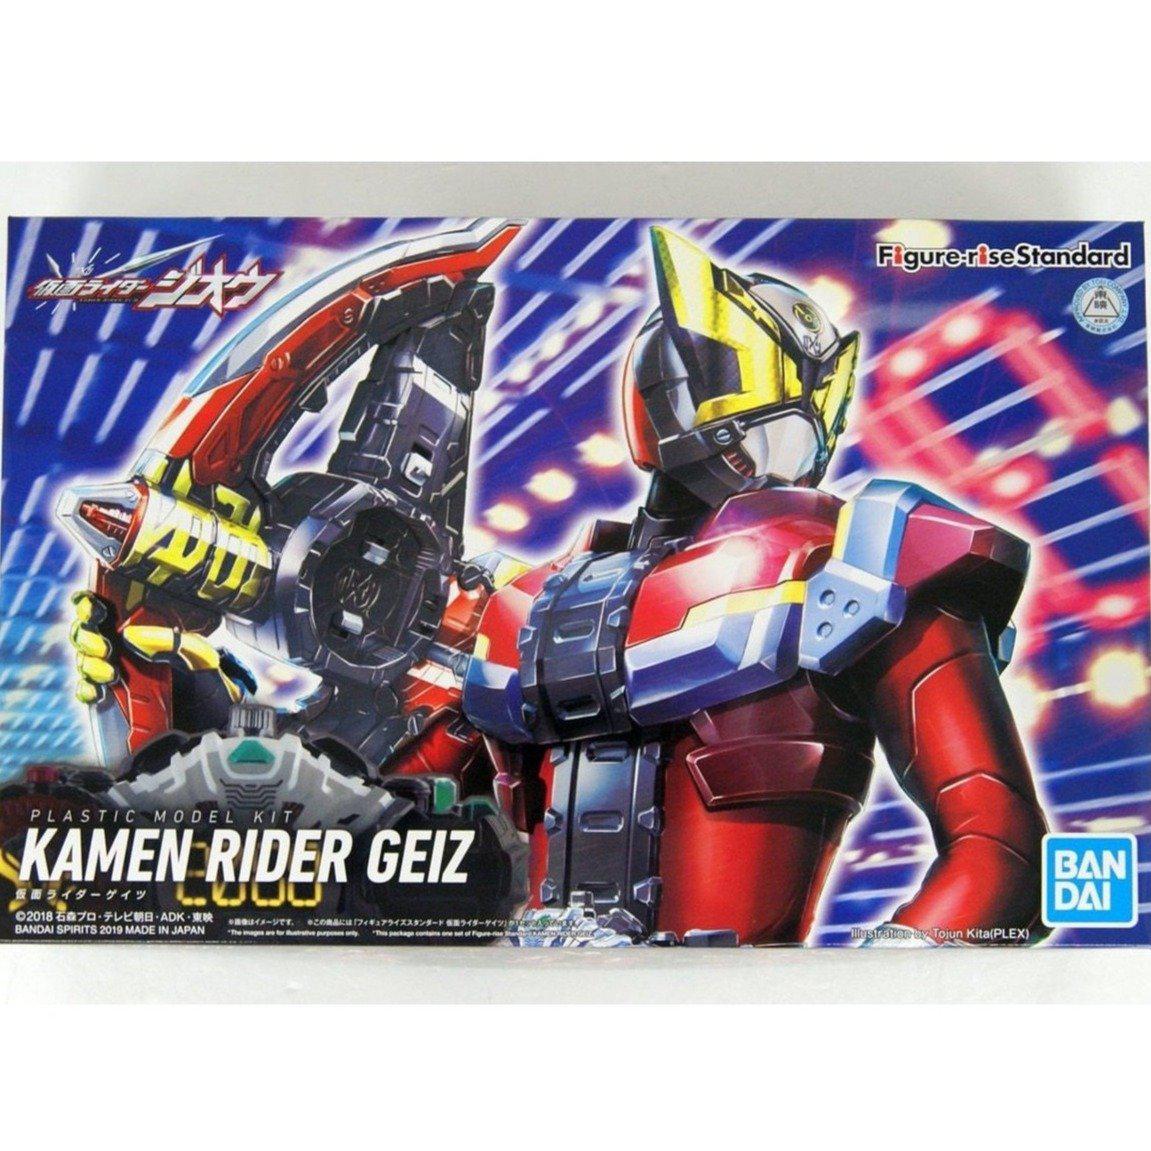 Kamen Rider Figure-rise Standard Kamen Rider Geiz-Bandai-Ace Cards & Collectibles